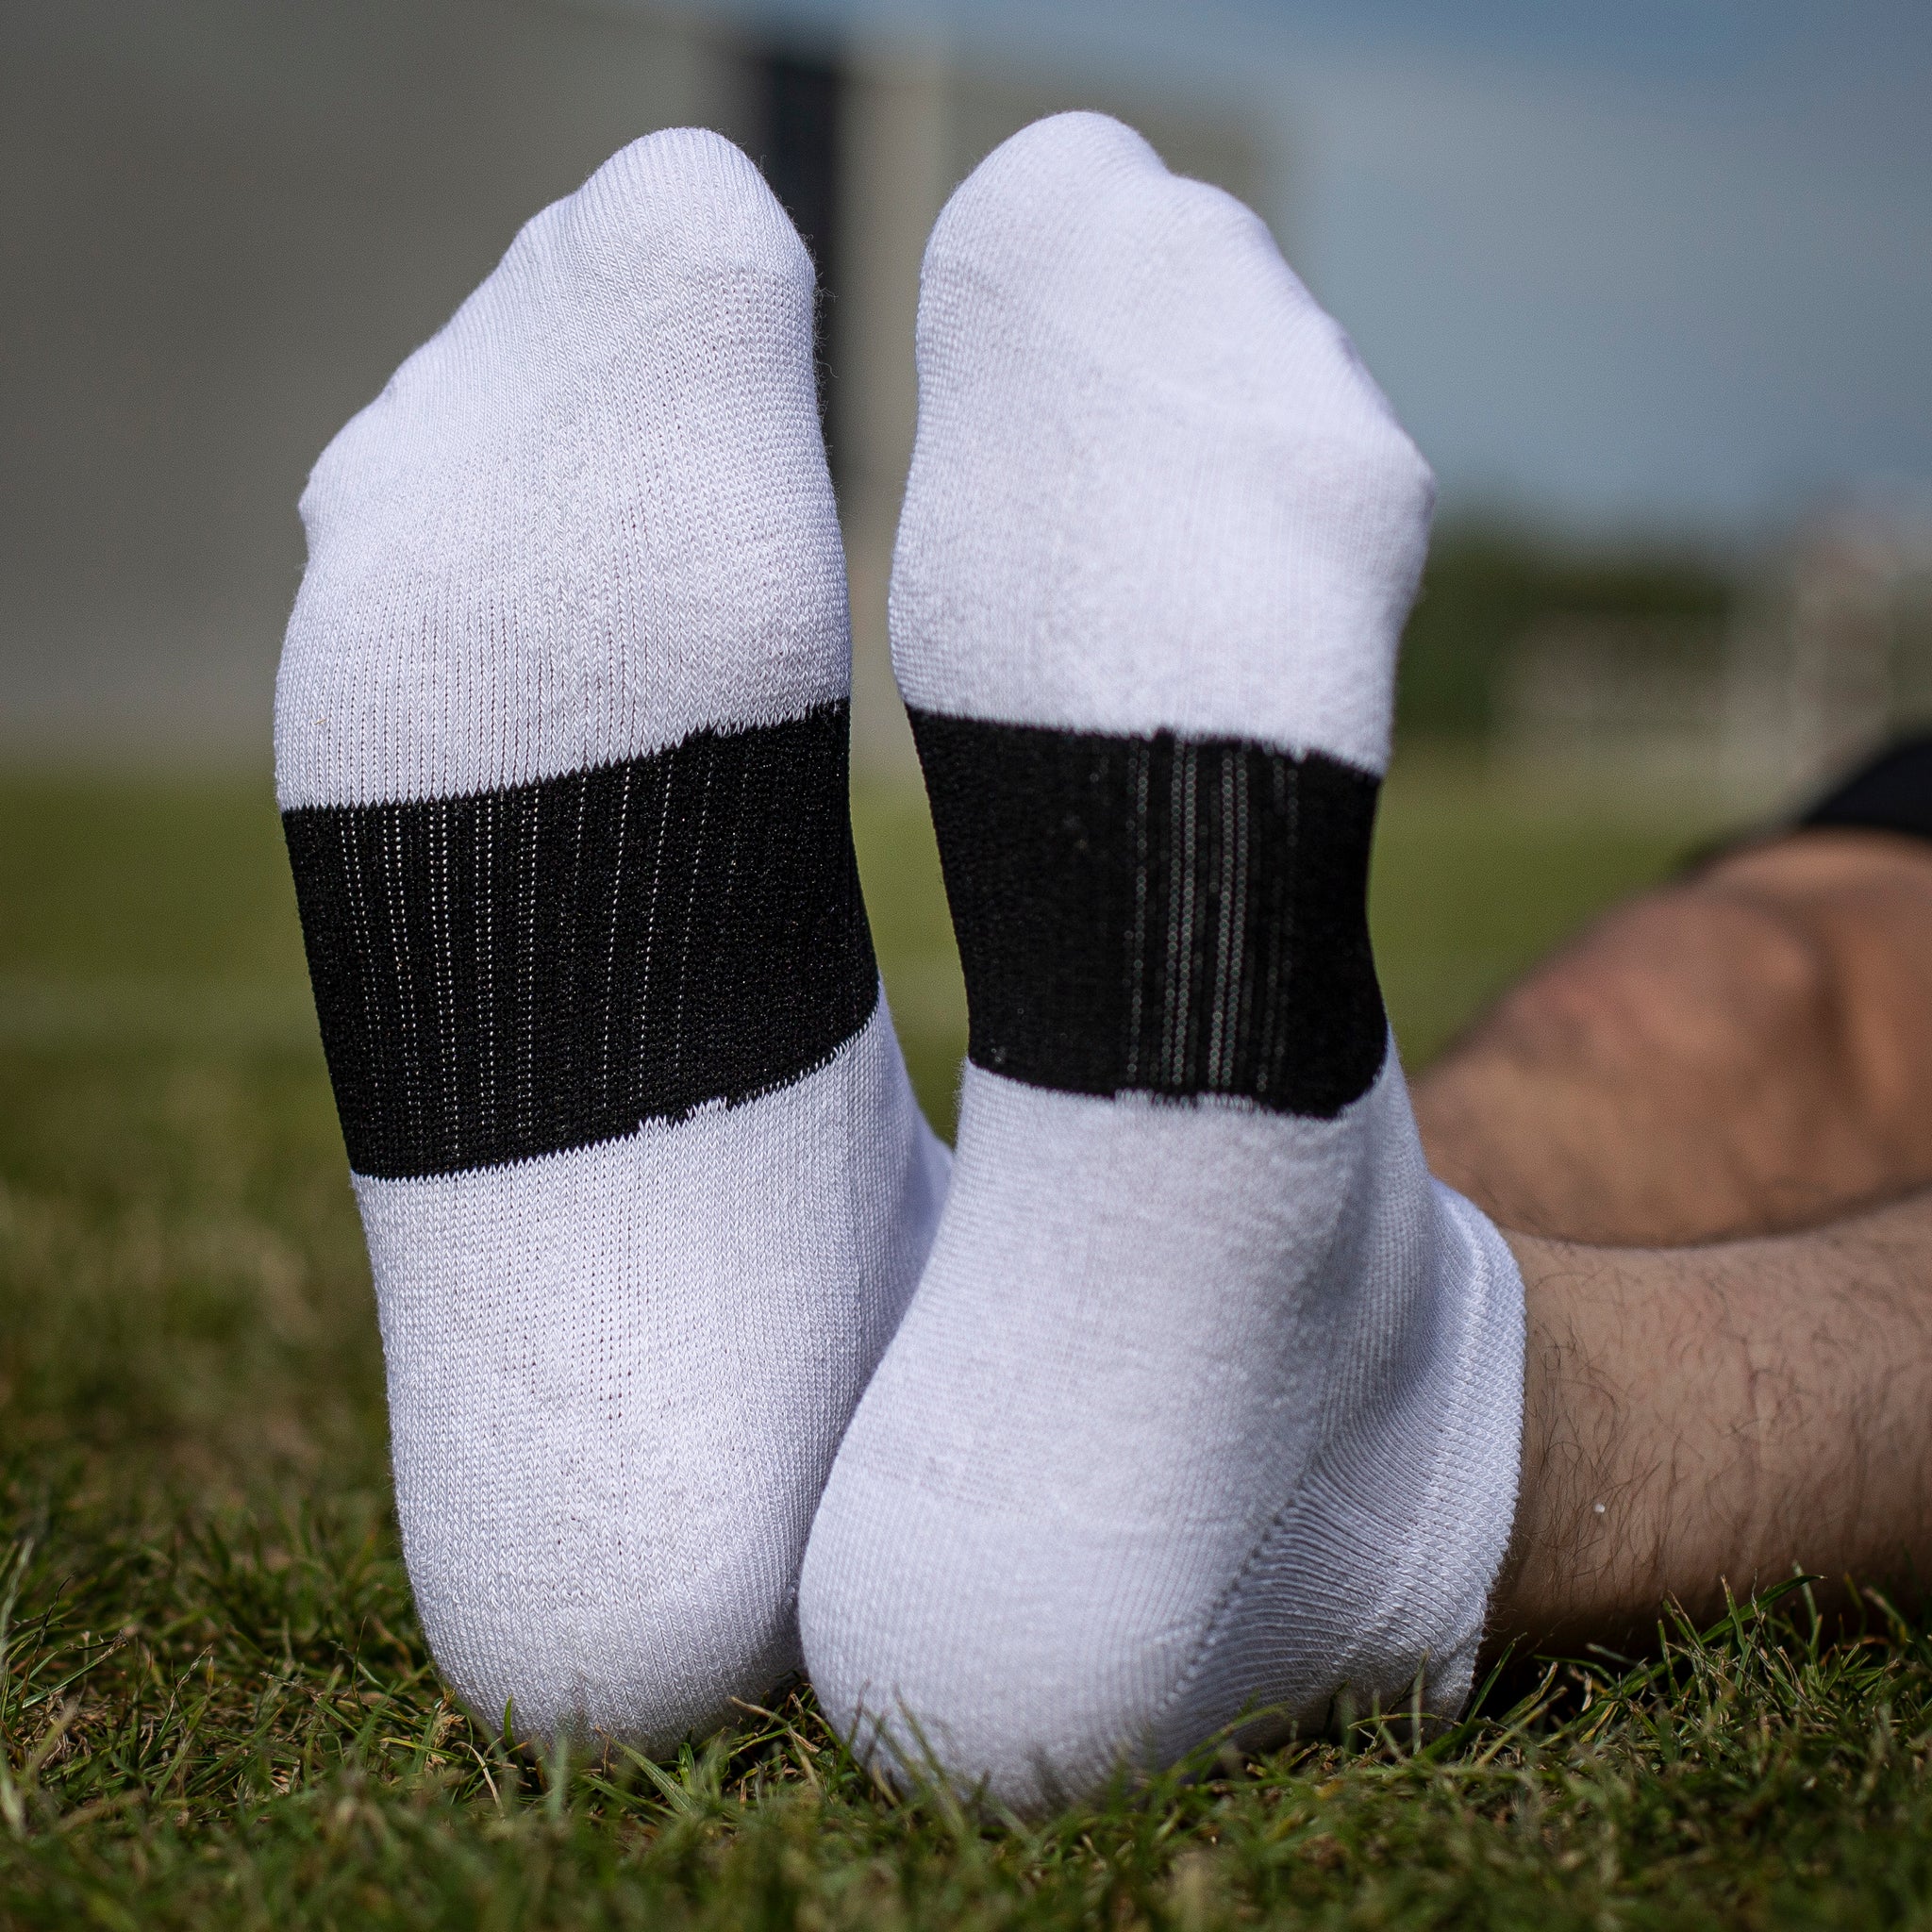 Pure Socks Classic Ankle Cut (Cotton) Black – Pure Grip Socks